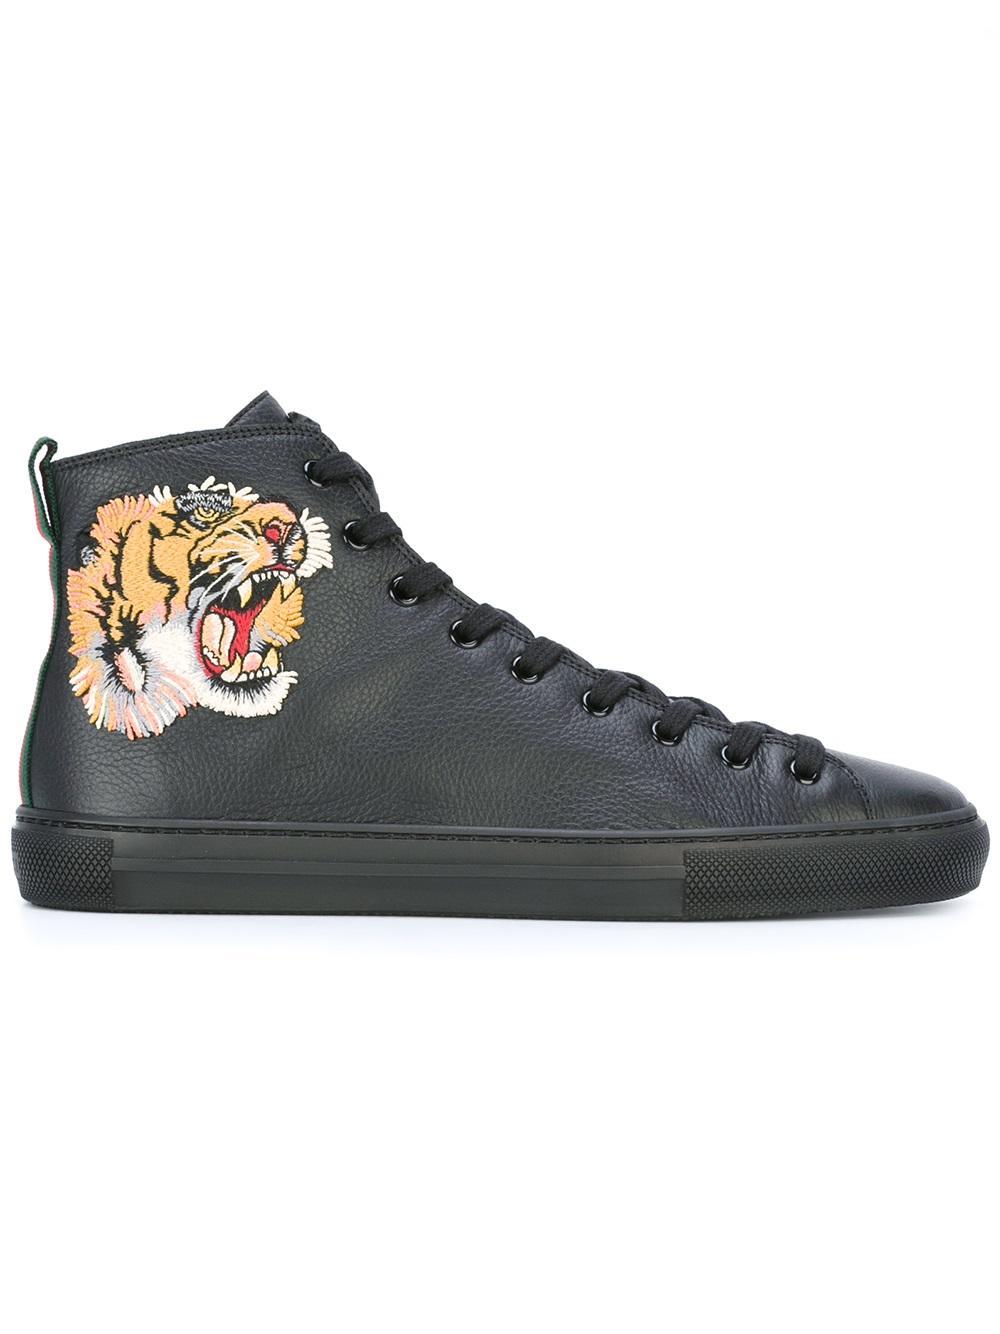 Lyst - Gucci Tiger Hi-top Sneakers in Black for Men